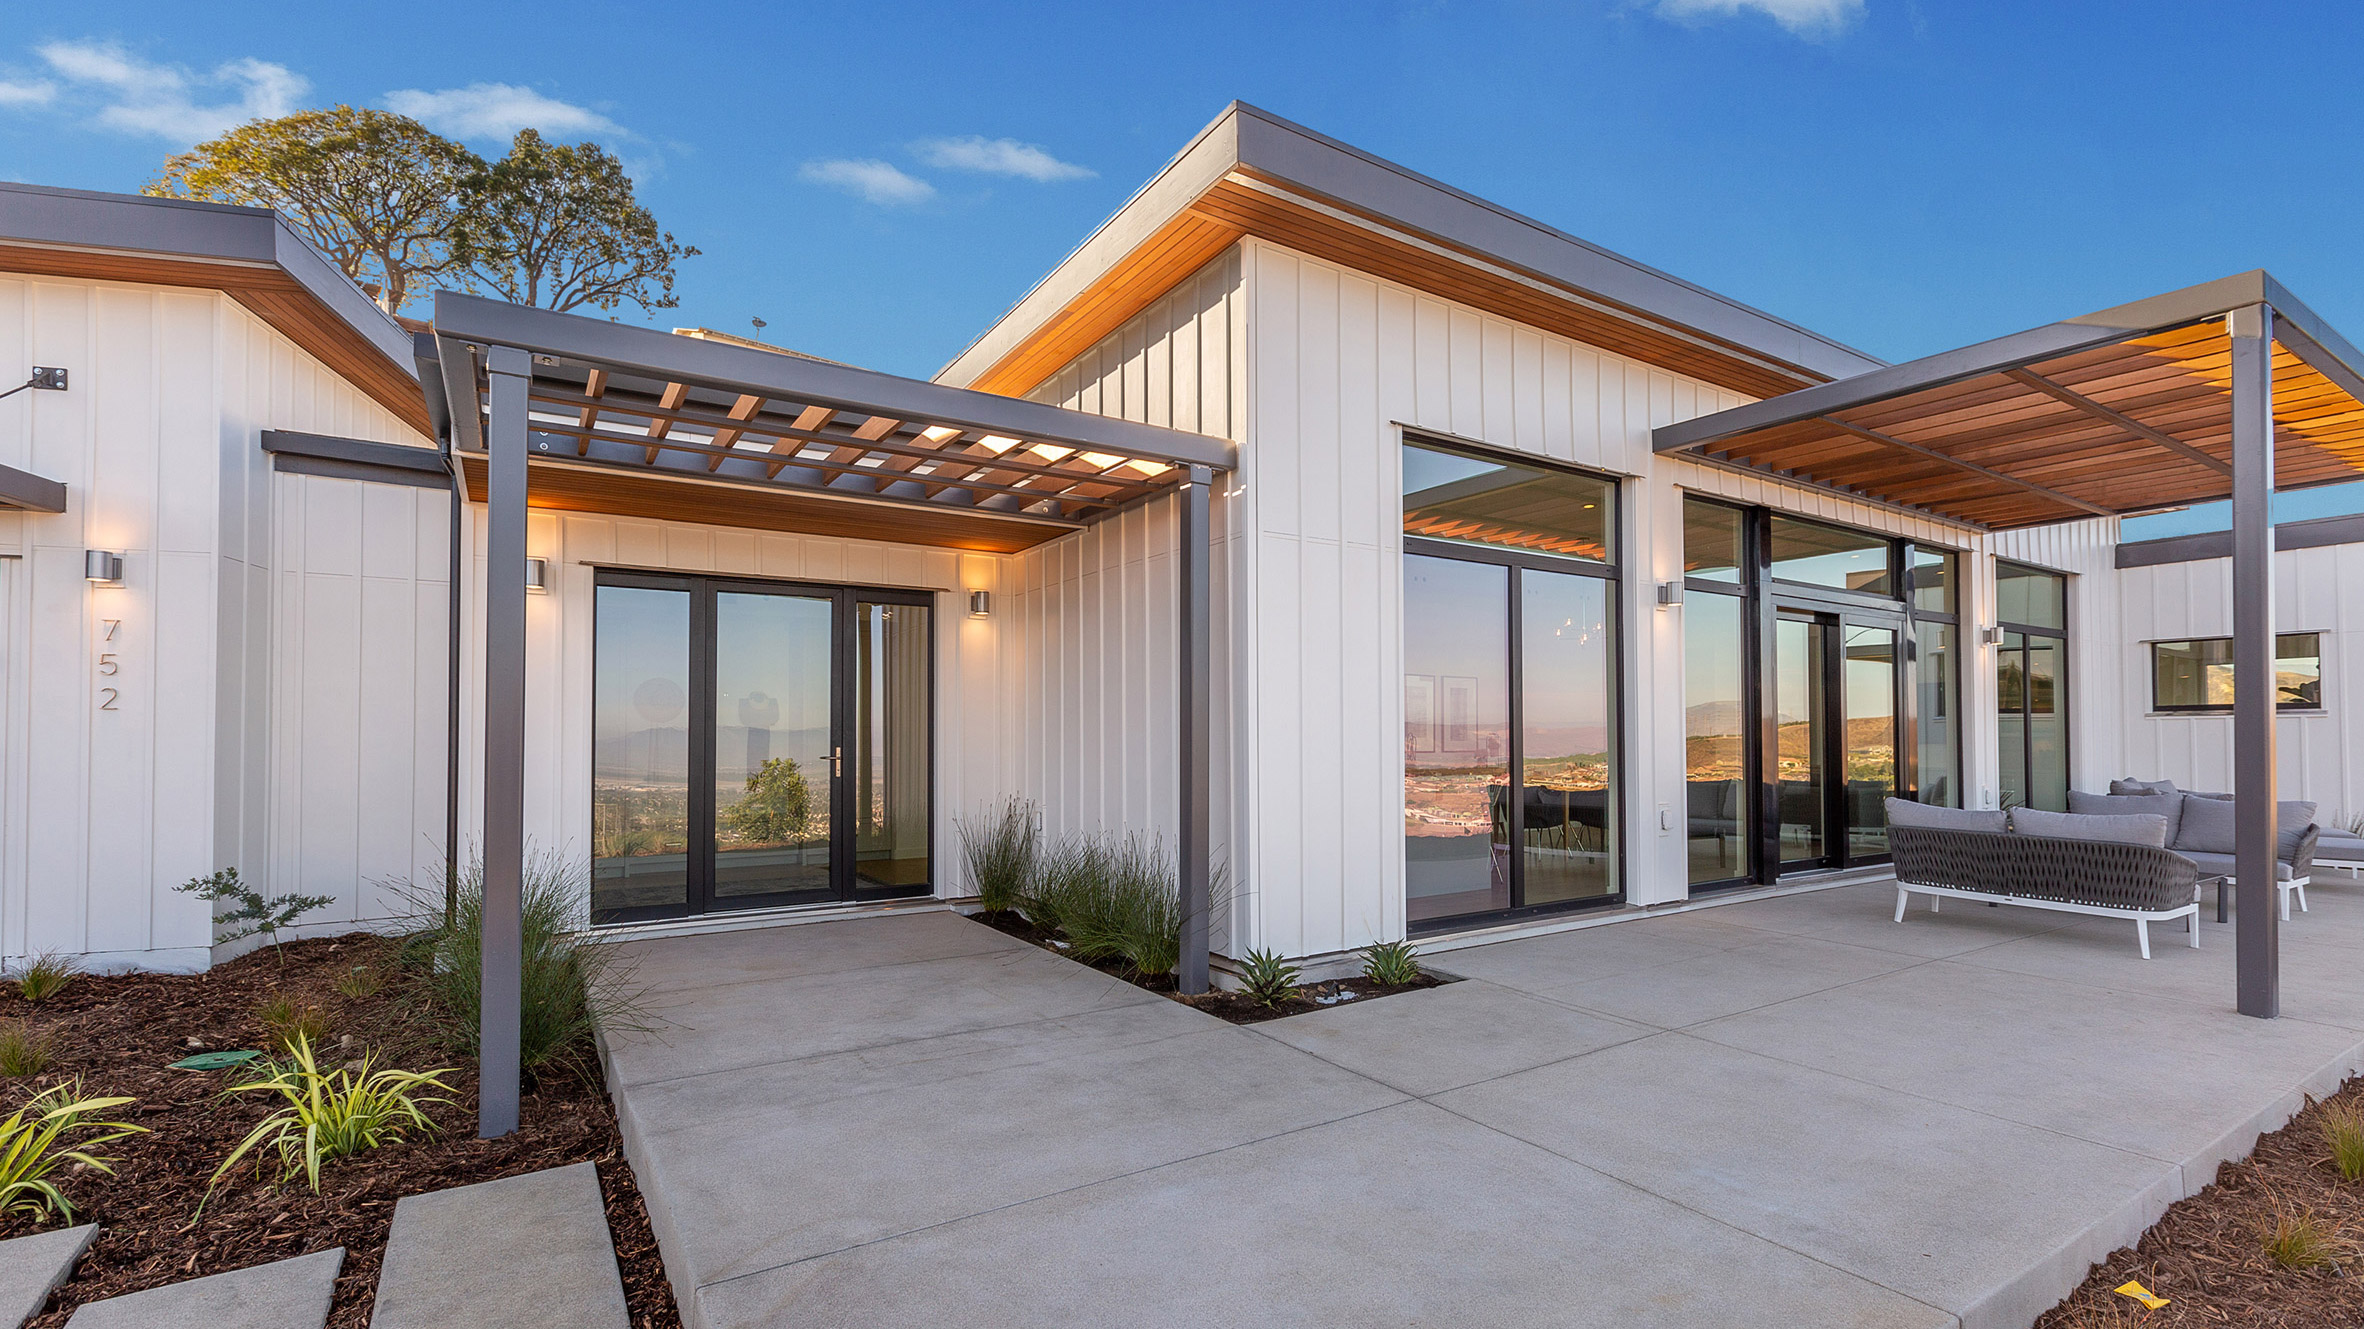 Dvele creates prefabricated homes that generate their own energy